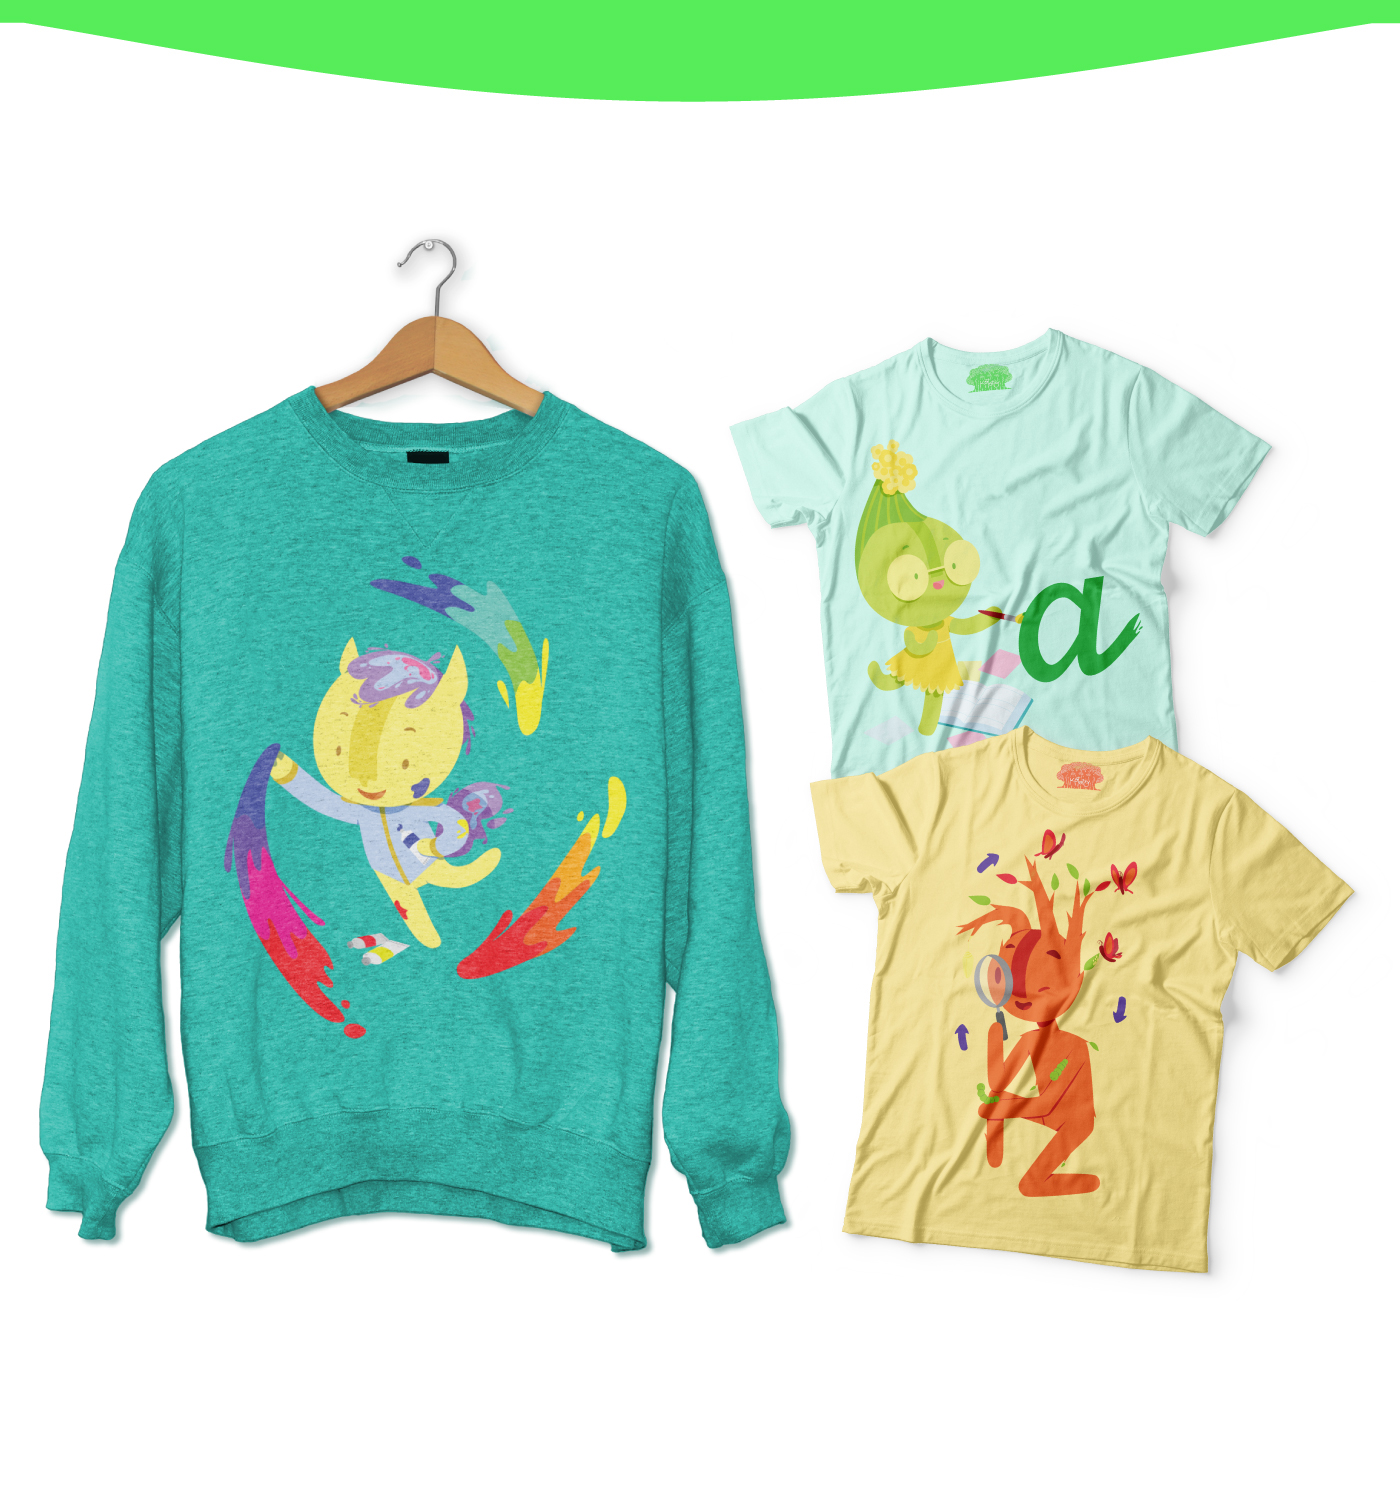 mundo kototo kids children brand characters colors products tshirts Startup Web UI